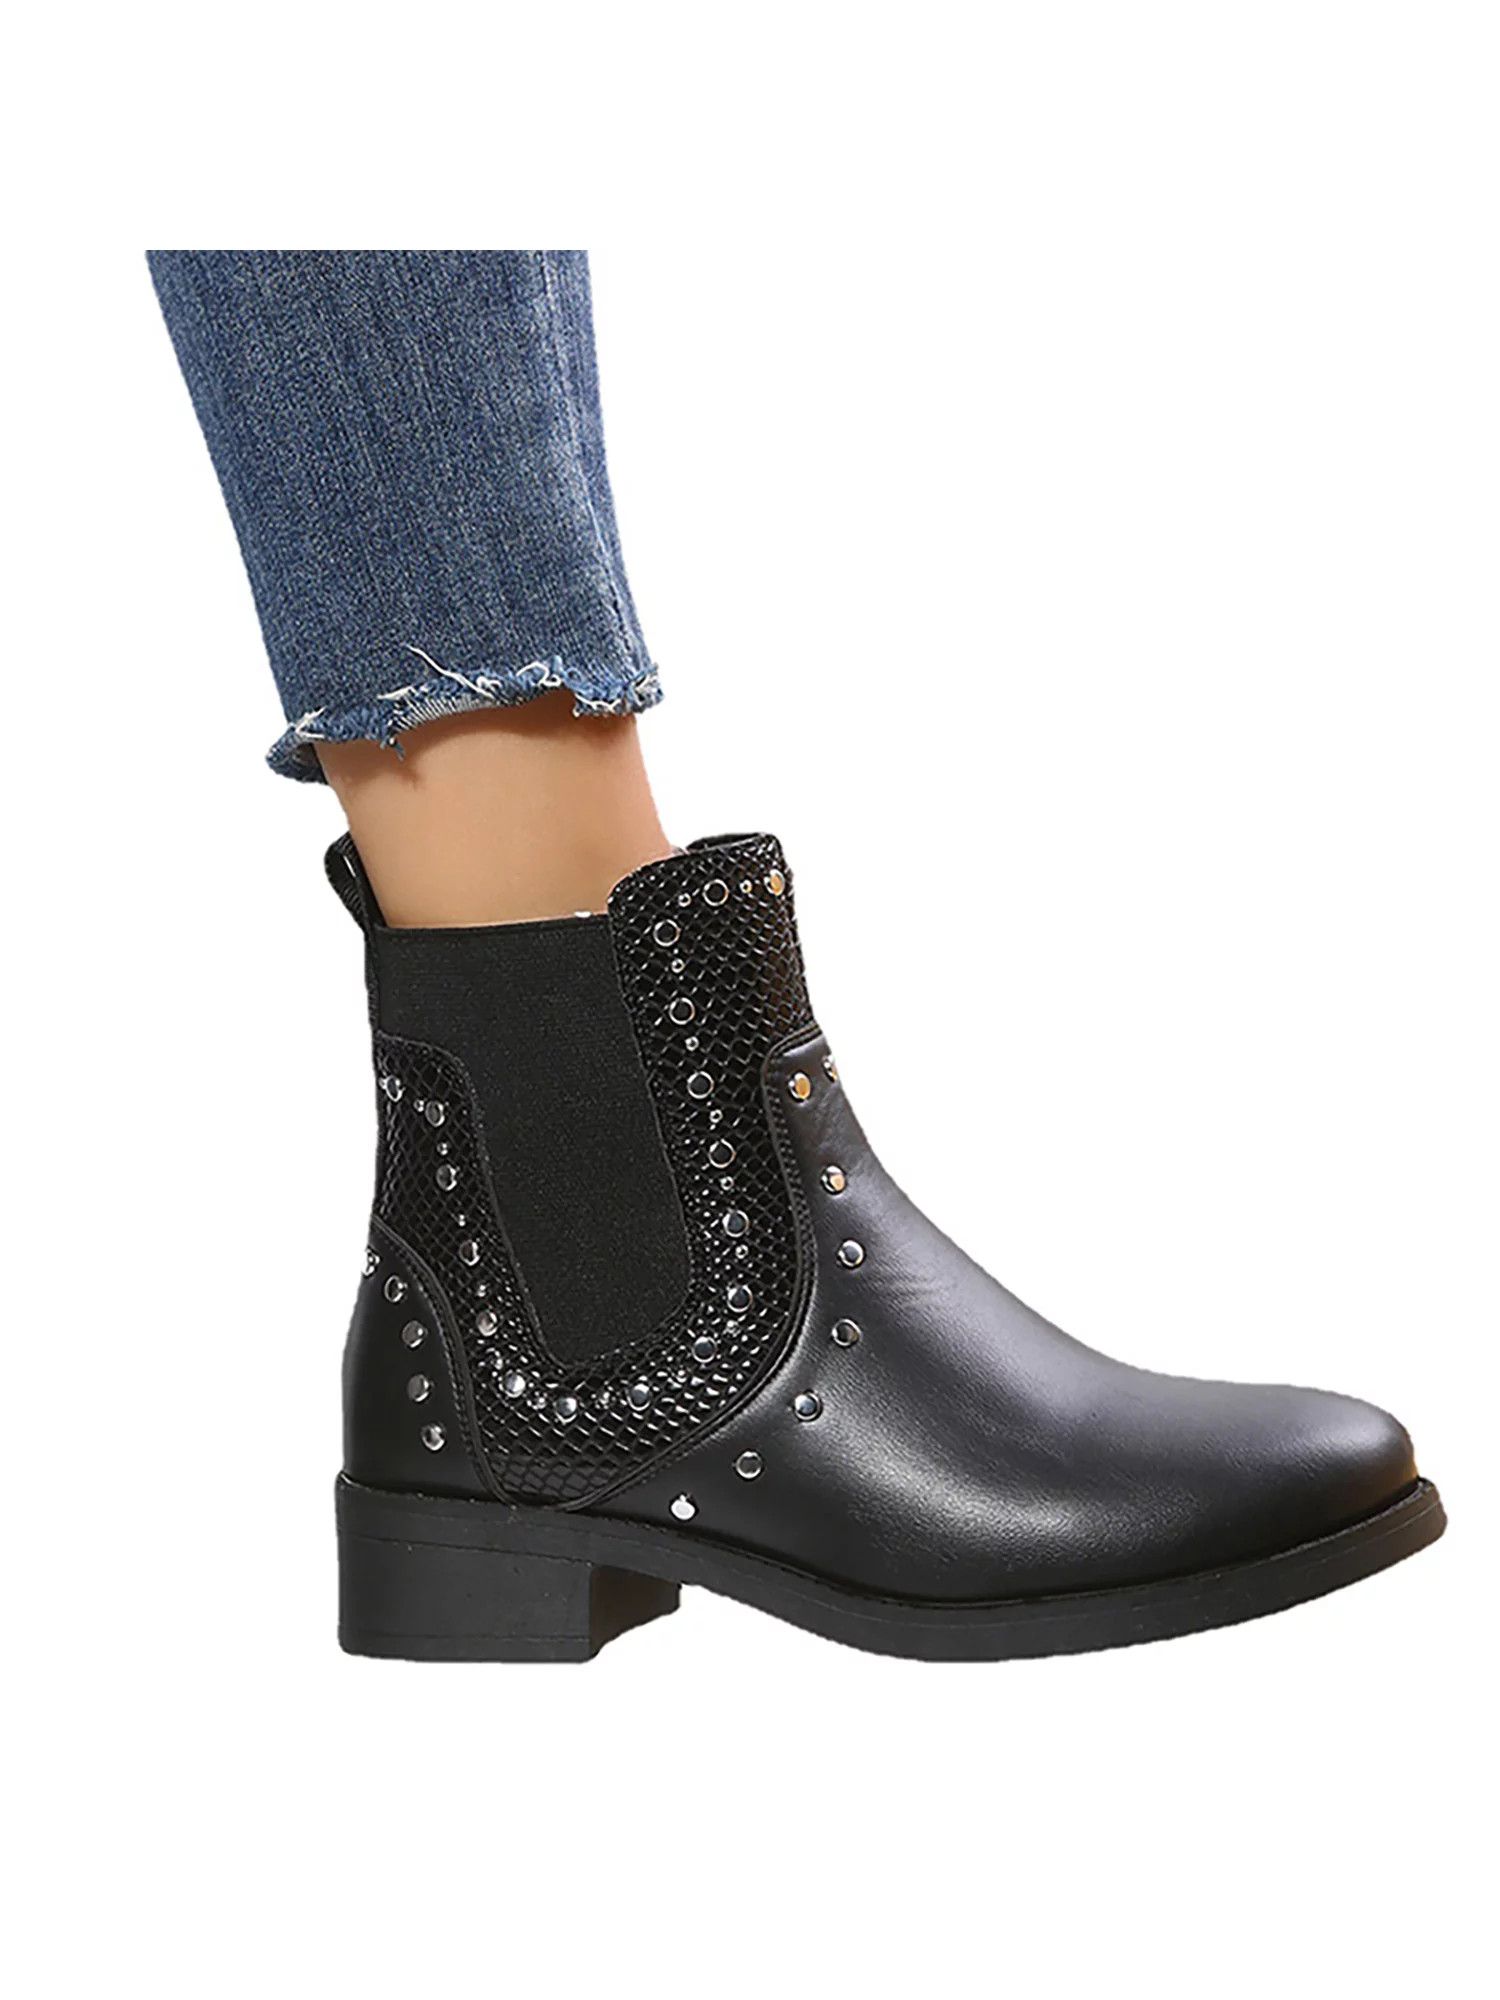 SIMANLAN Women Lightweight Winter Shoes Fashion Studded Chelsea Boot Casual Wear Resistant Elasti... | Walmart (US)